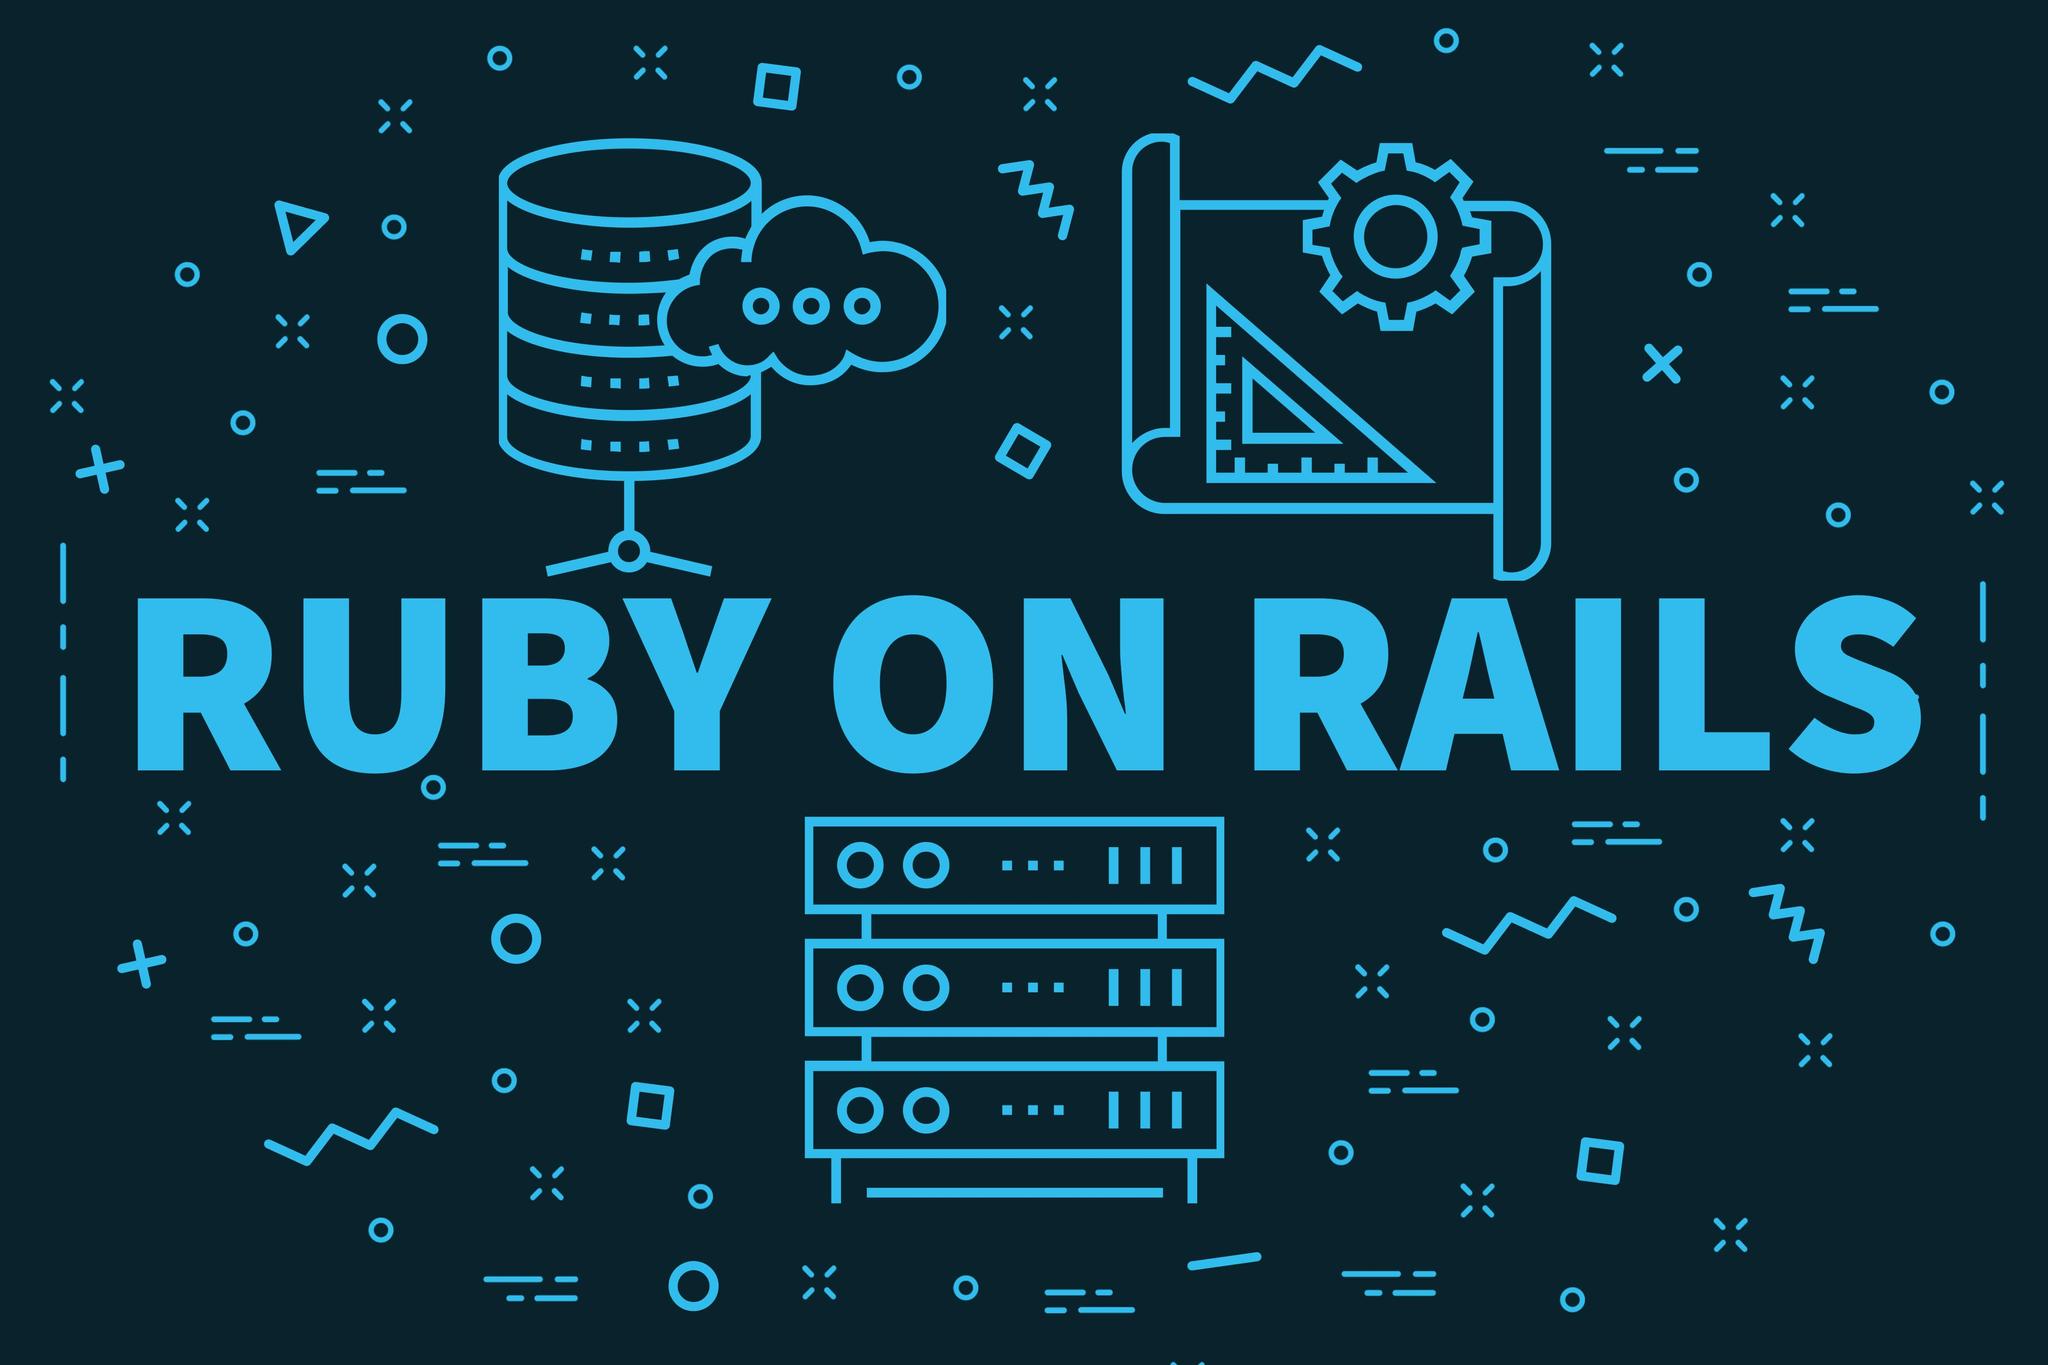 Cover Image for Ruby on Railsとは？基礎知識と特徴をわかりやすく解説